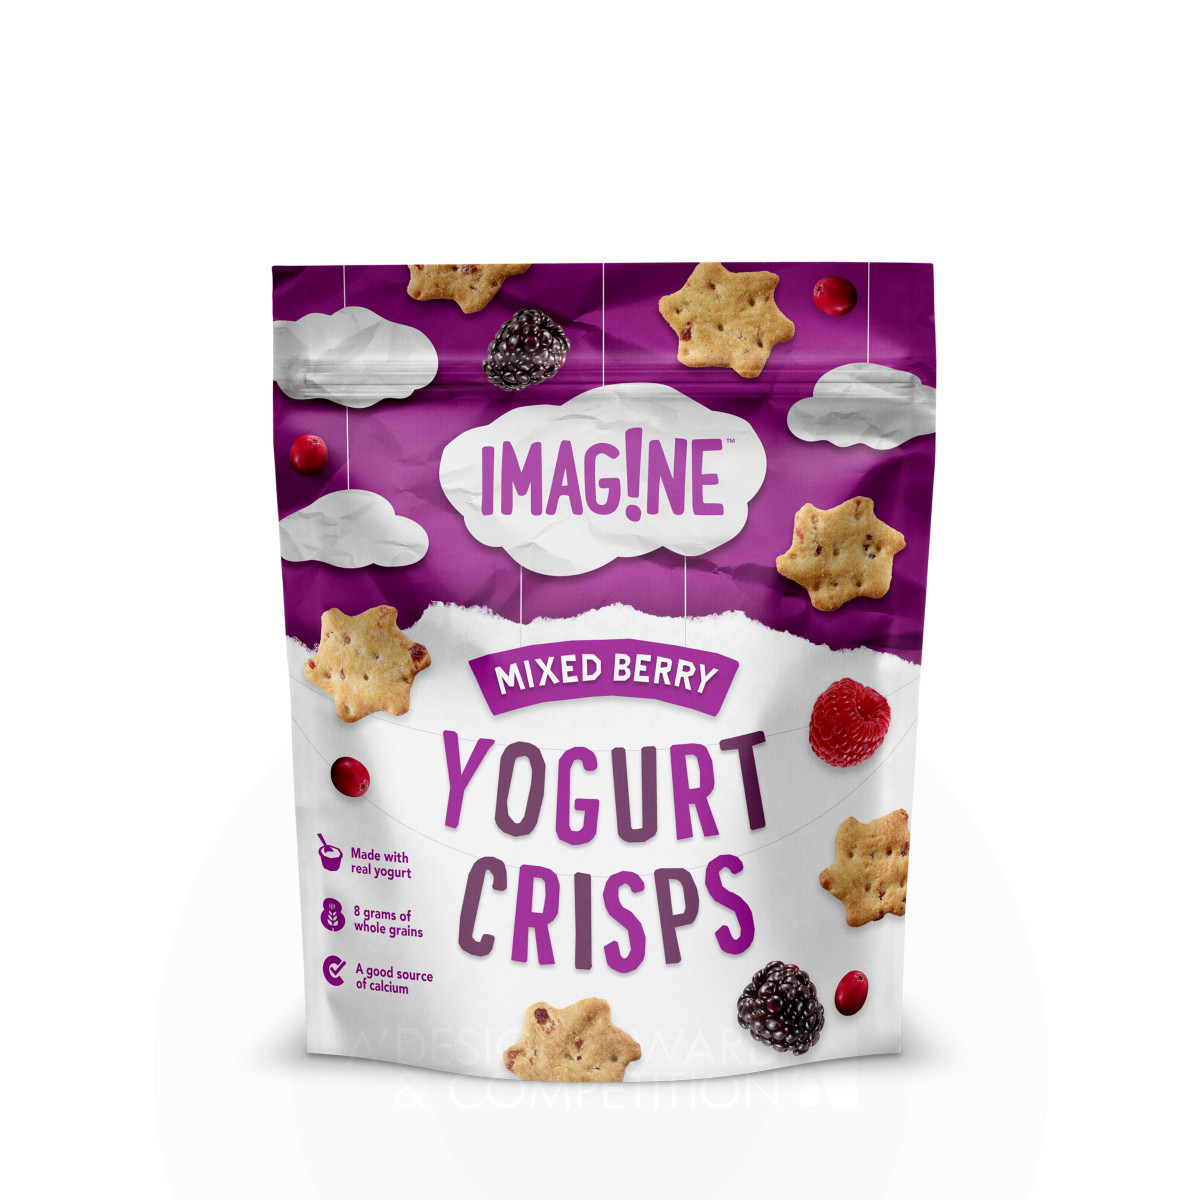 Imagine Snacks Packaging by PepsiCo Design & Innovation